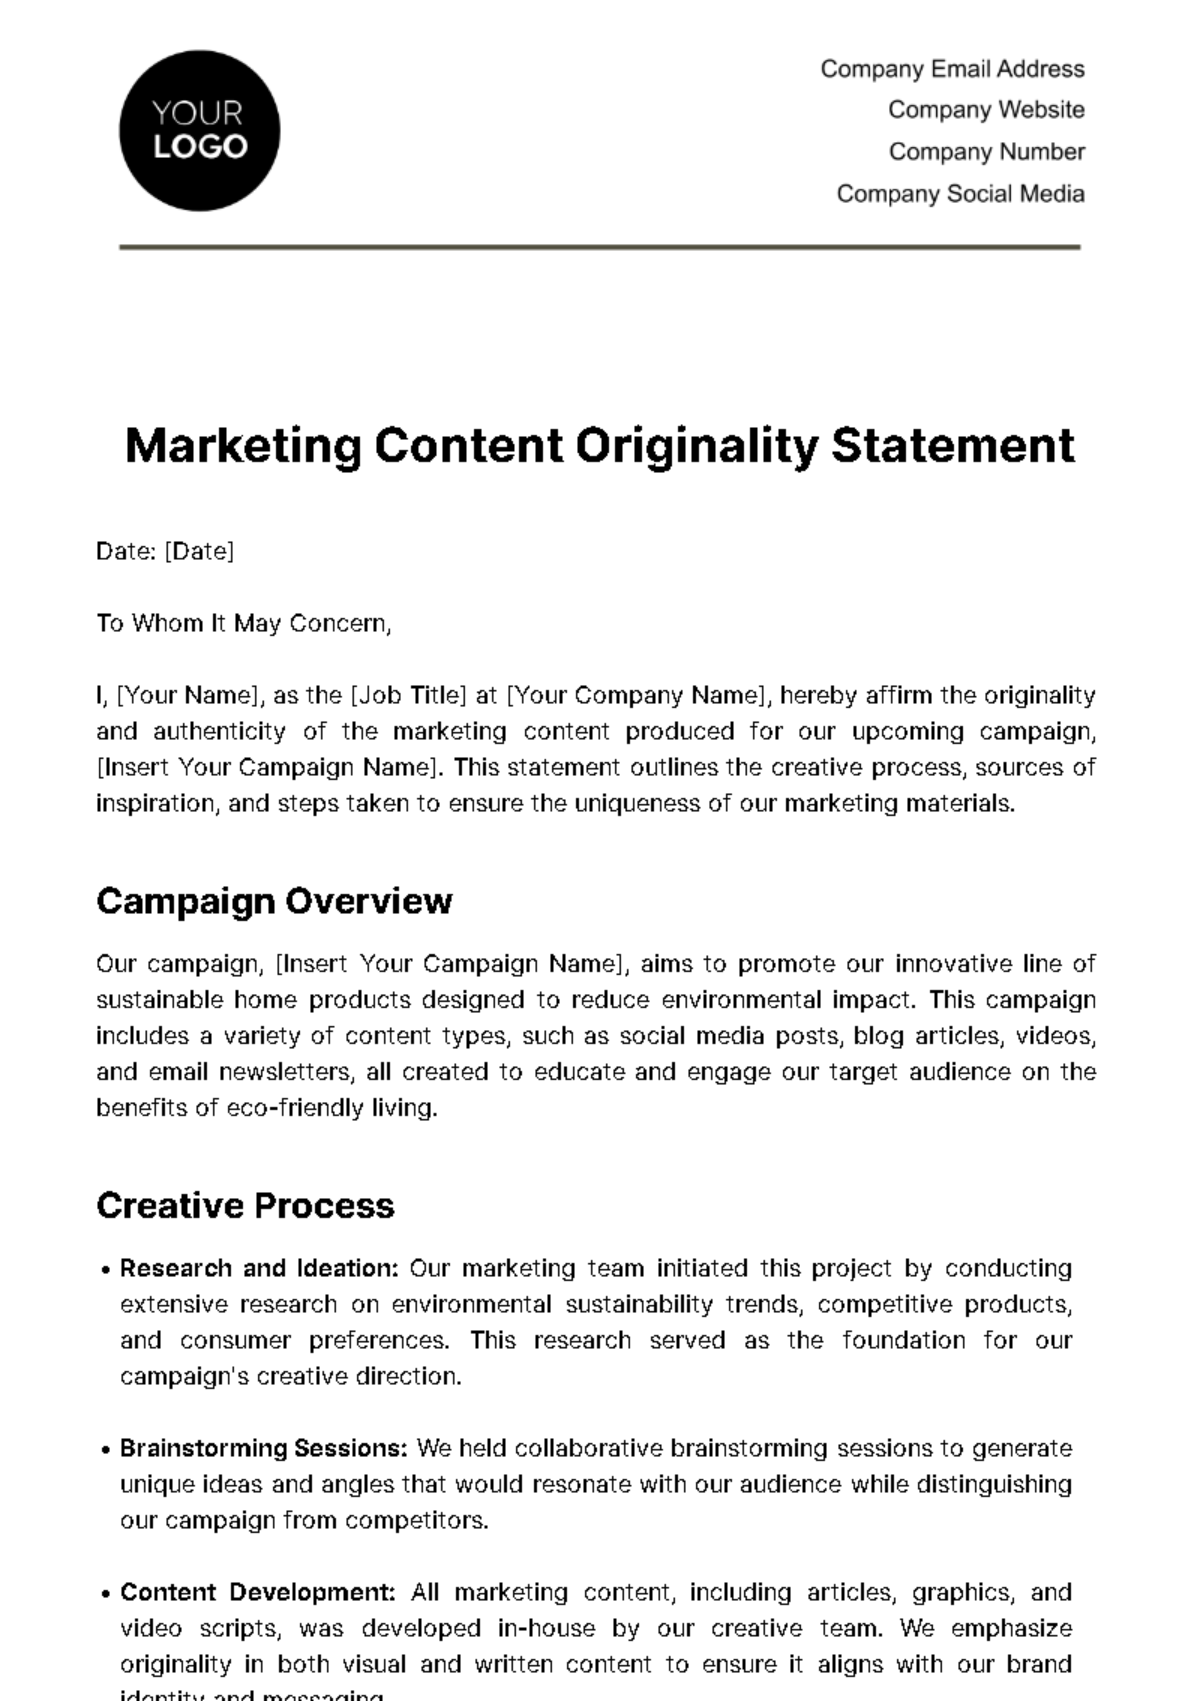 Marketing Content Originality Statement Template